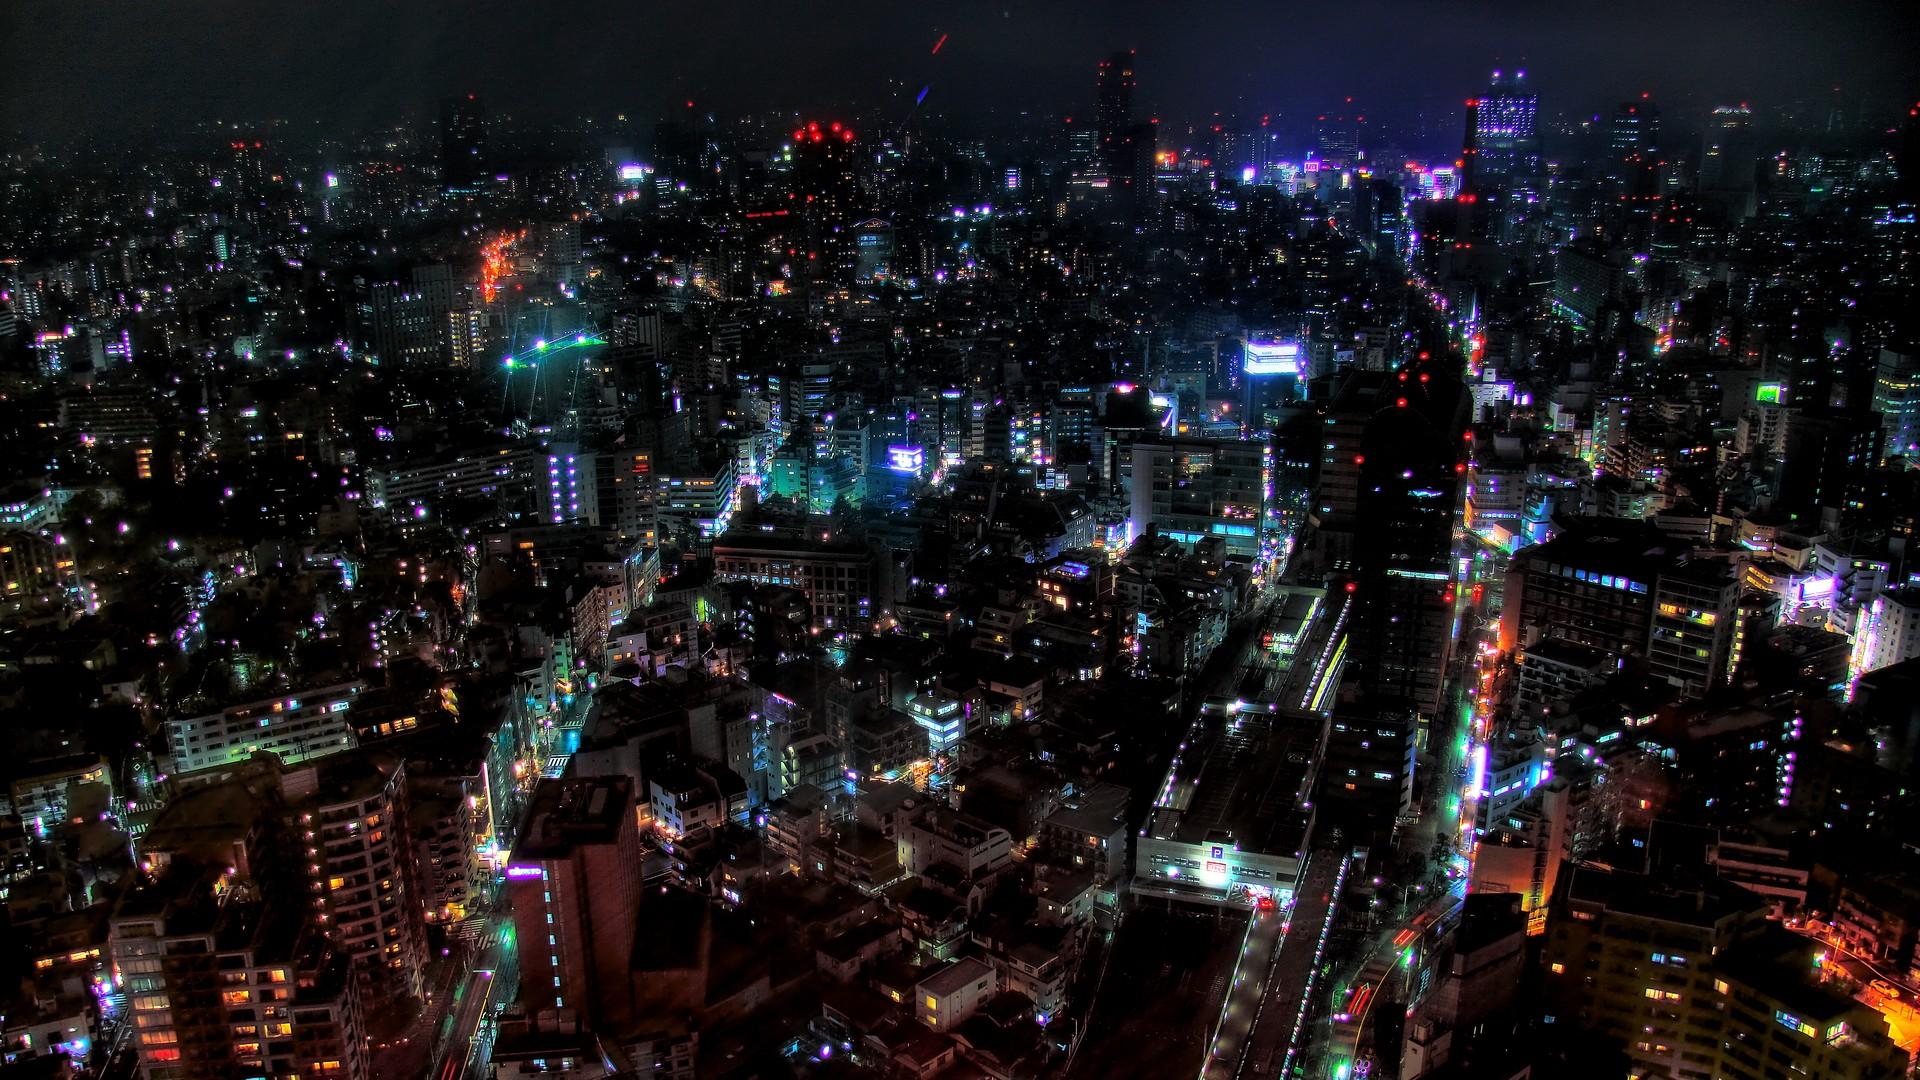 Foto de Tokyo Anime city Lights wallpaper do Stock